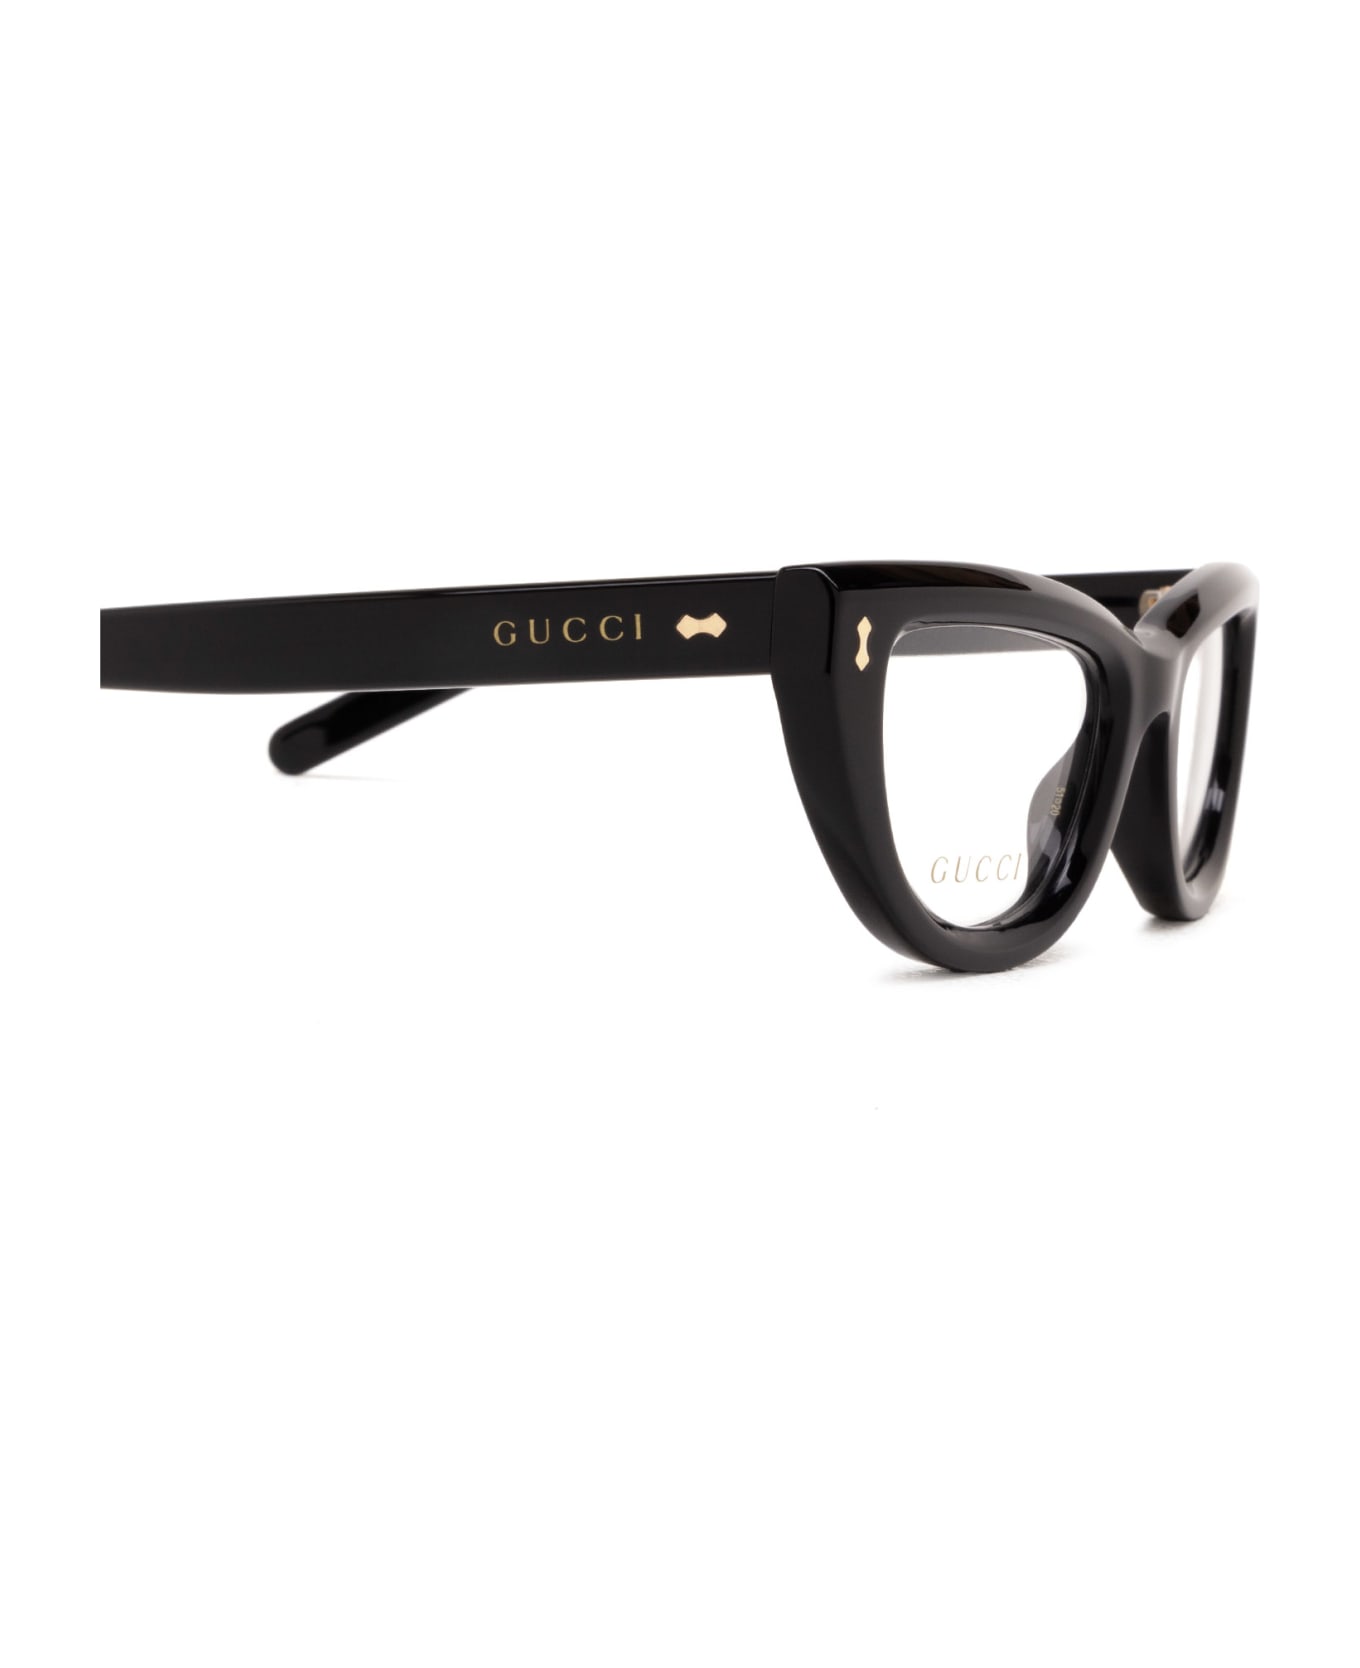 Gucci Eyewear Gg1521o Black Glasses - Black